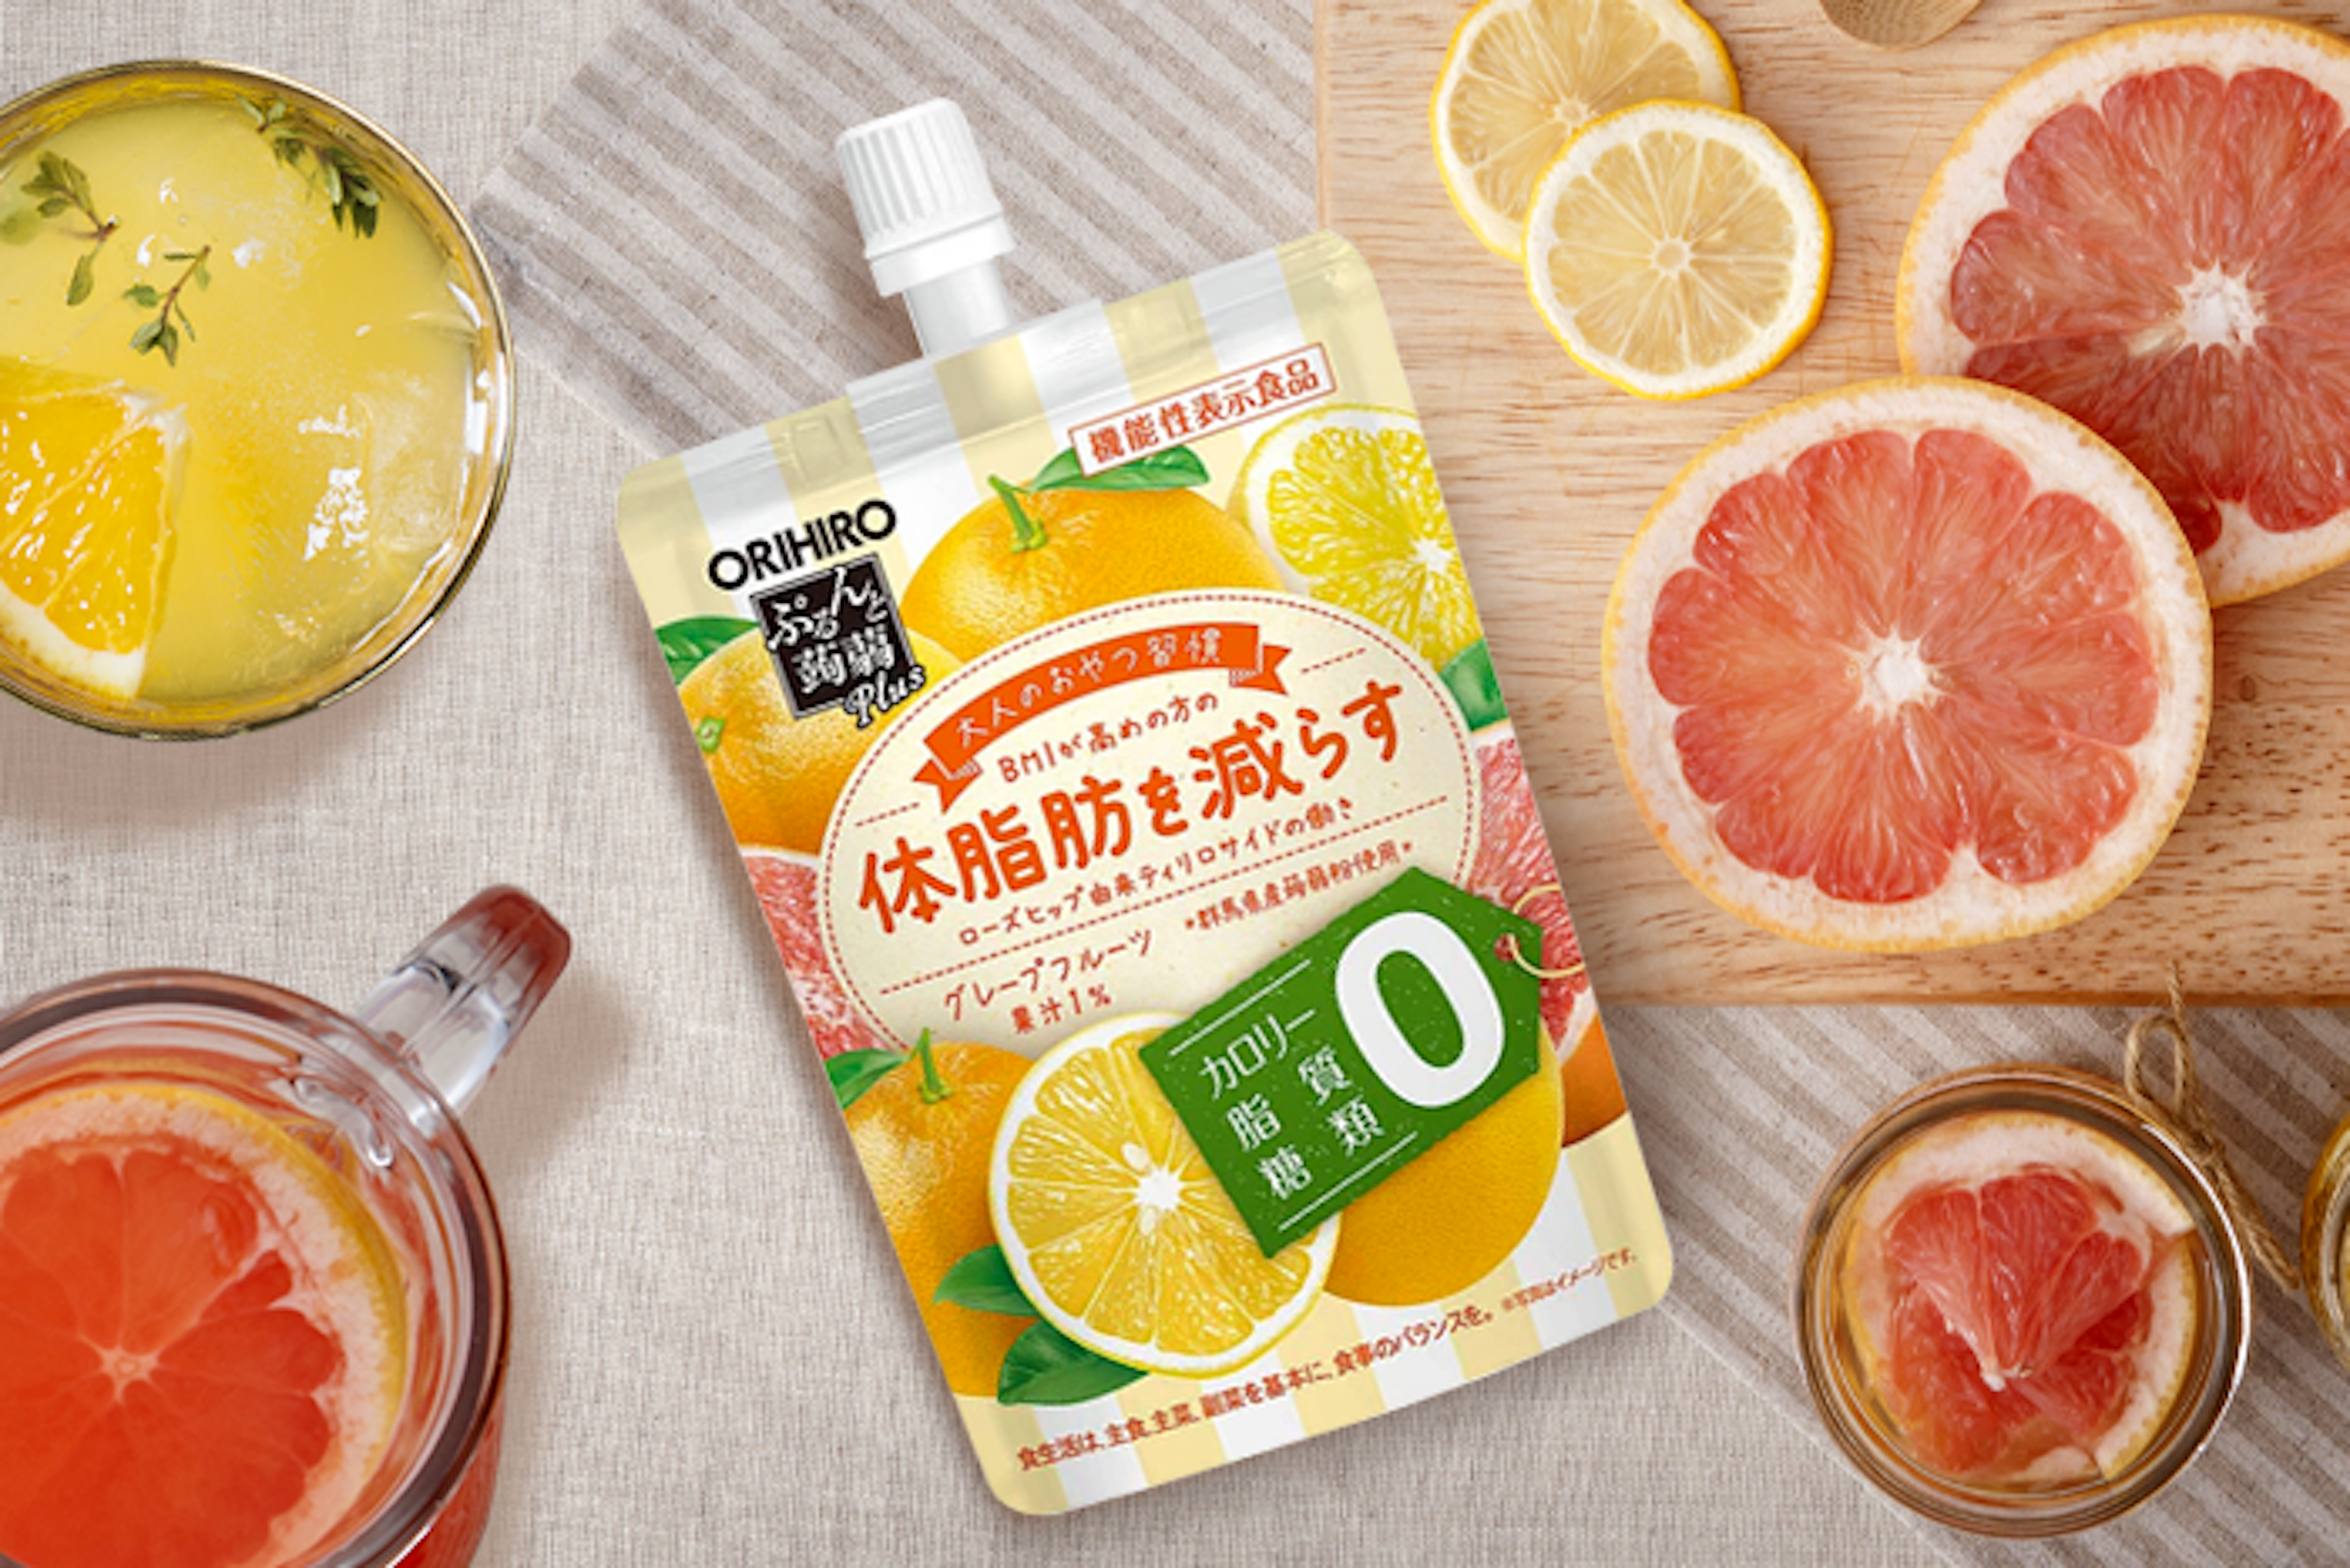 ORIHIRO Puru Puru Konjac Jelly Drink Grapefruit Flavor 130g - Calorie-Free, Healthy Snack